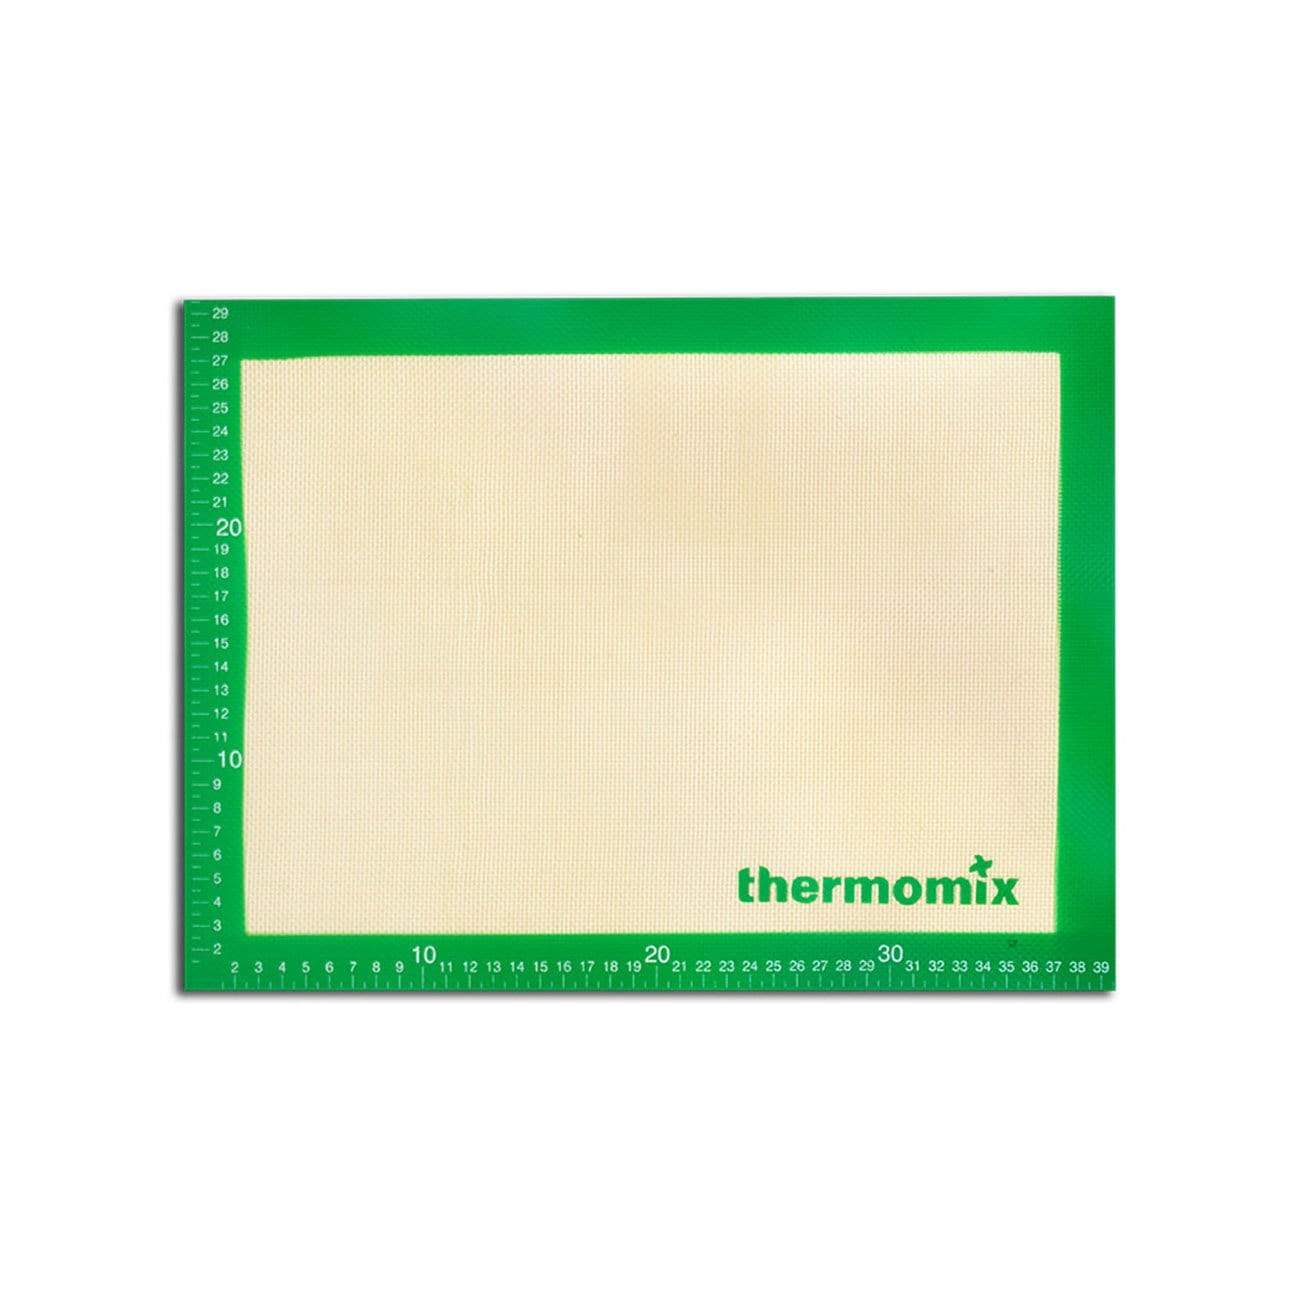 Thermomix-New-Zealand Thermomix NZ Thermomat Duo Bundle Bundles